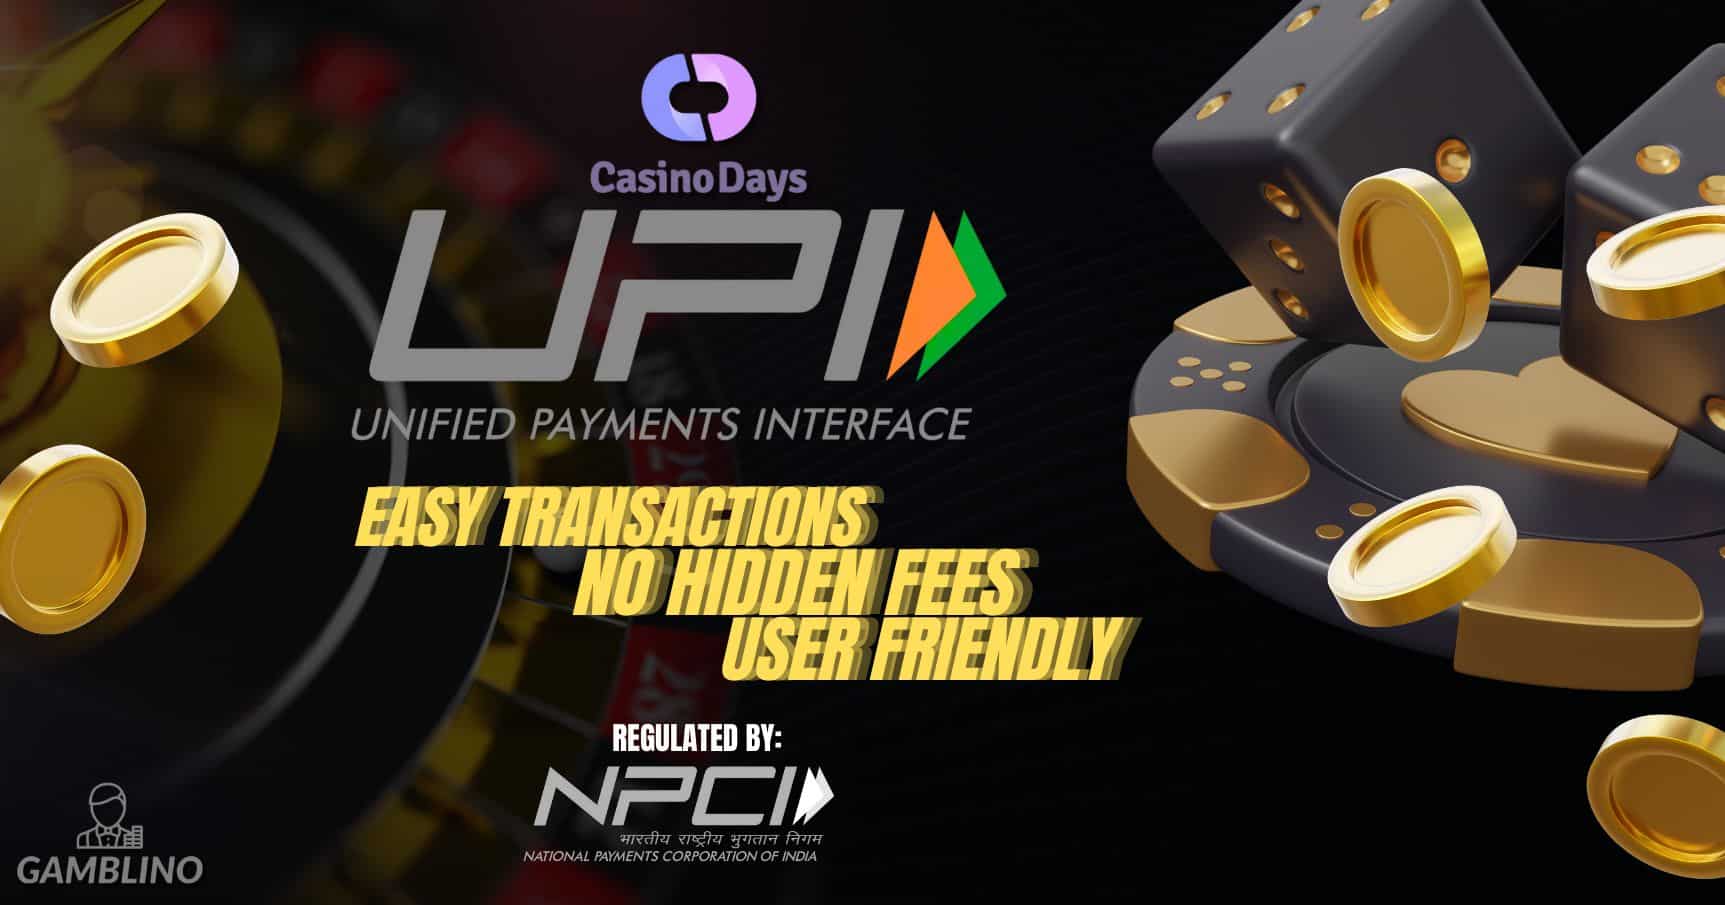 benefits of using upi at casino days